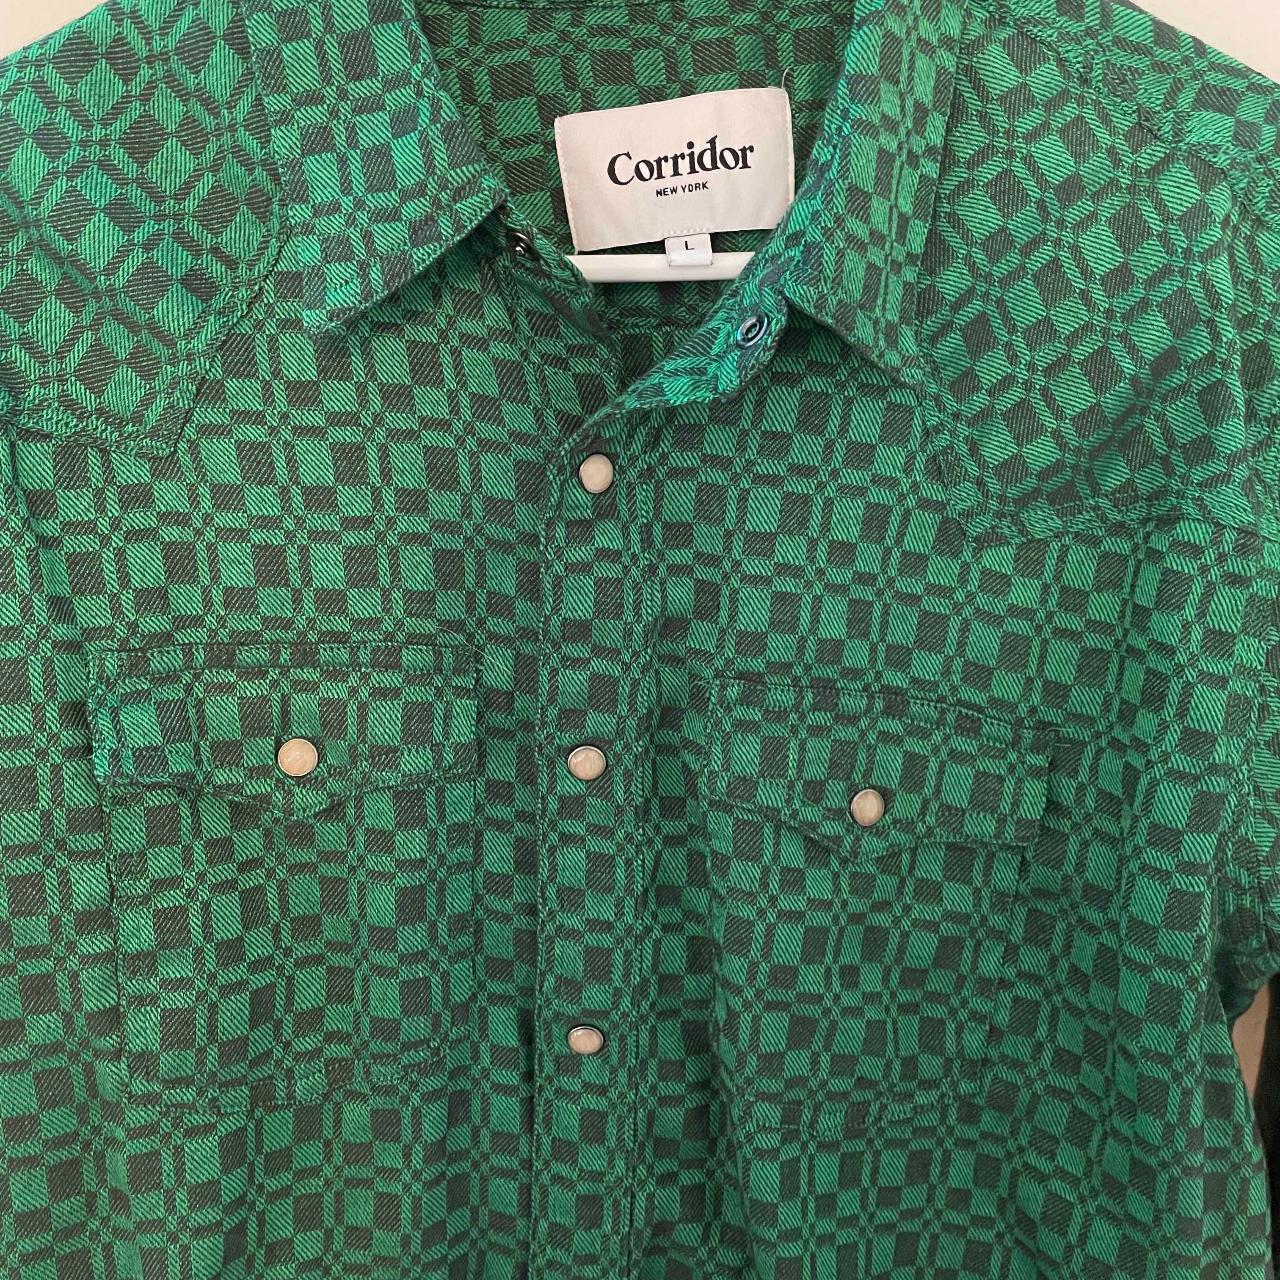 Corridor Men's Green Shirt (2)